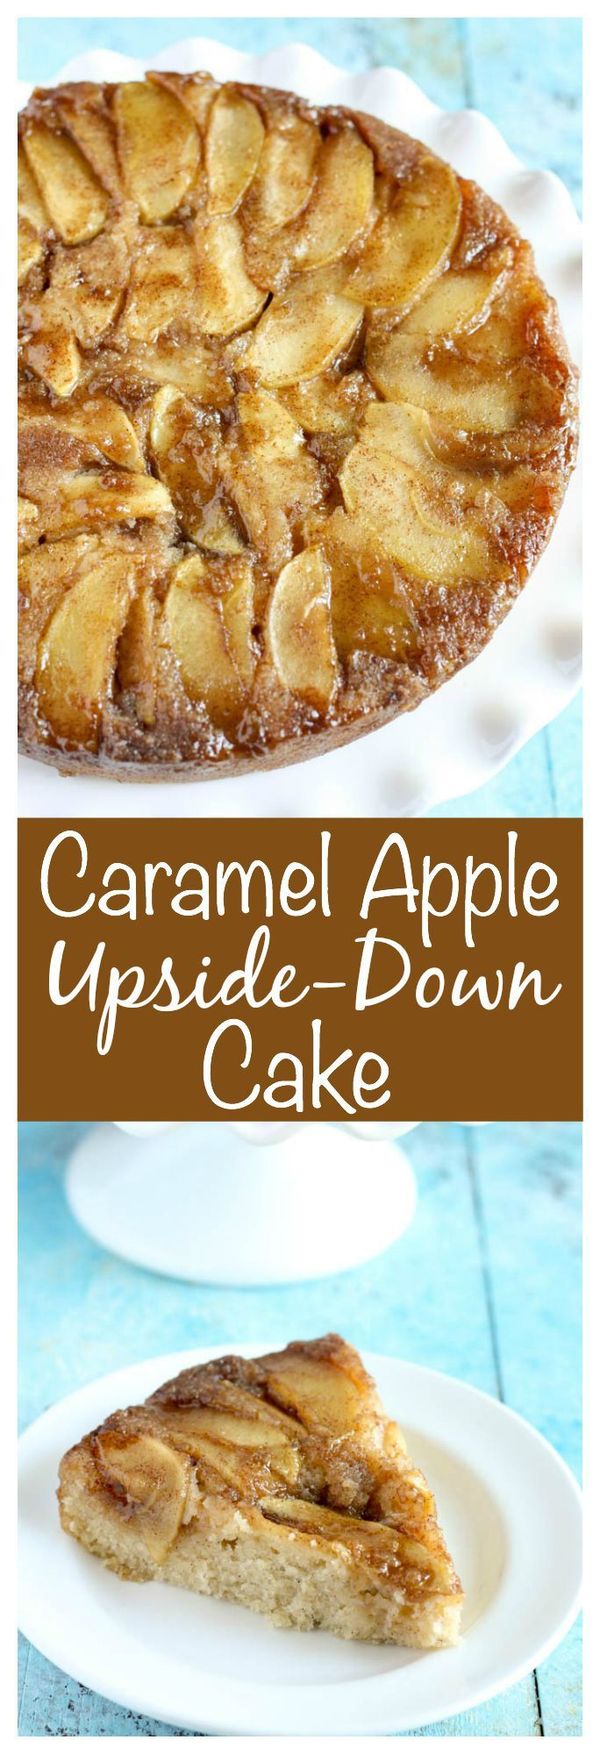 Caramel Apple Upside-Down Cake